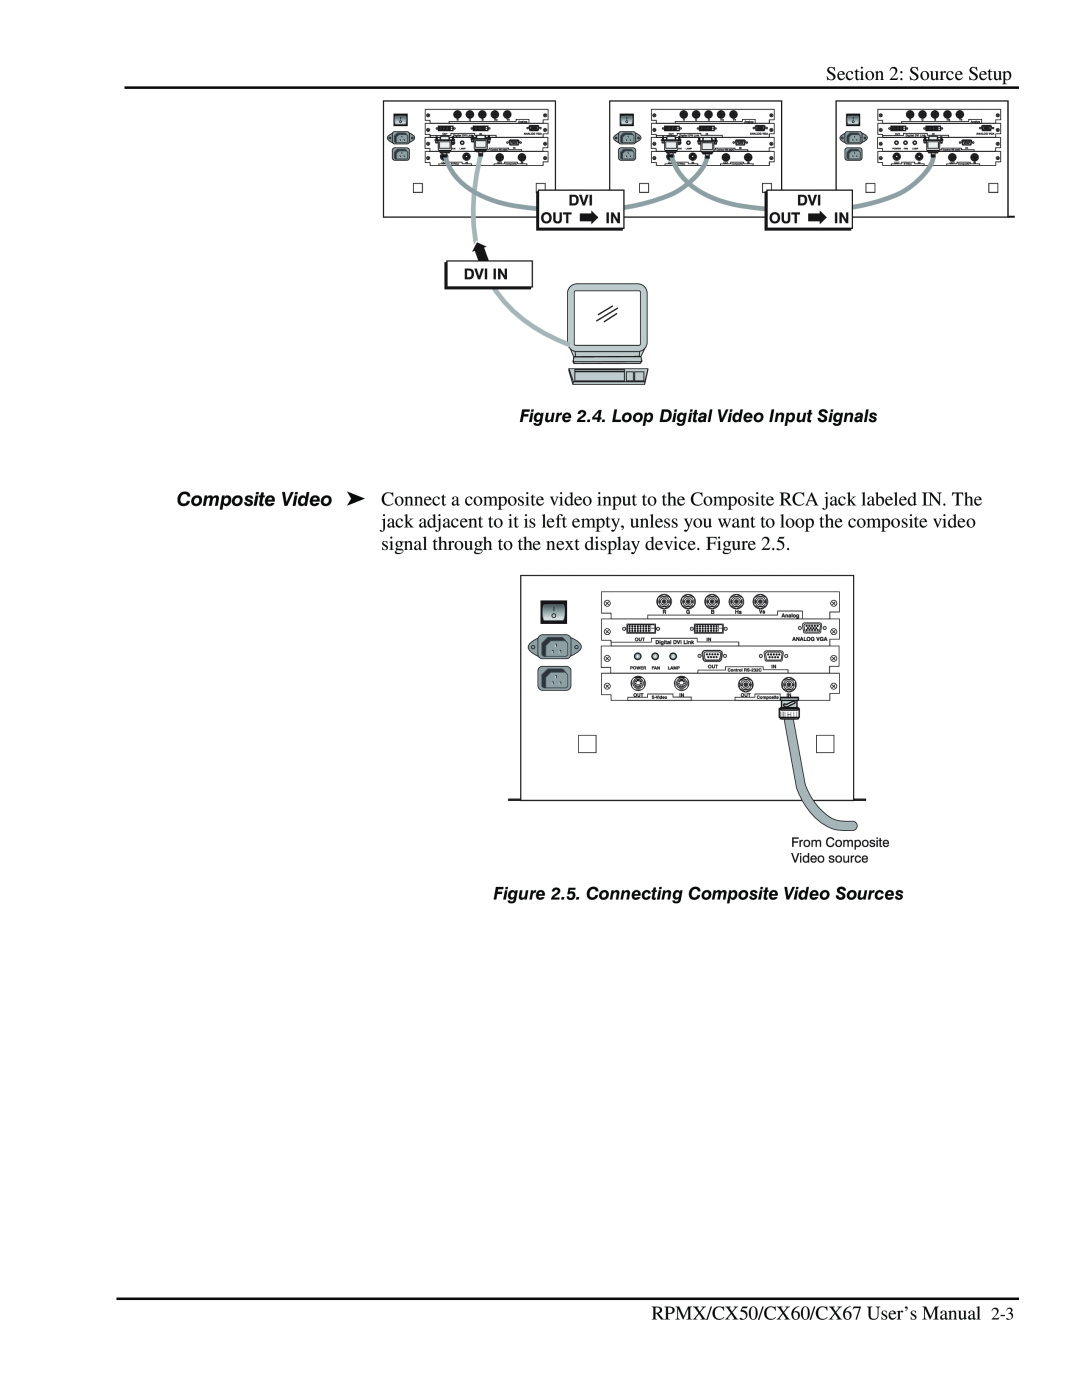 Christie Digital Systems Source Setup, RPMX/CX50/CX60/CX67 User’s Manual, 4. Loop Digital Video Input Signals 